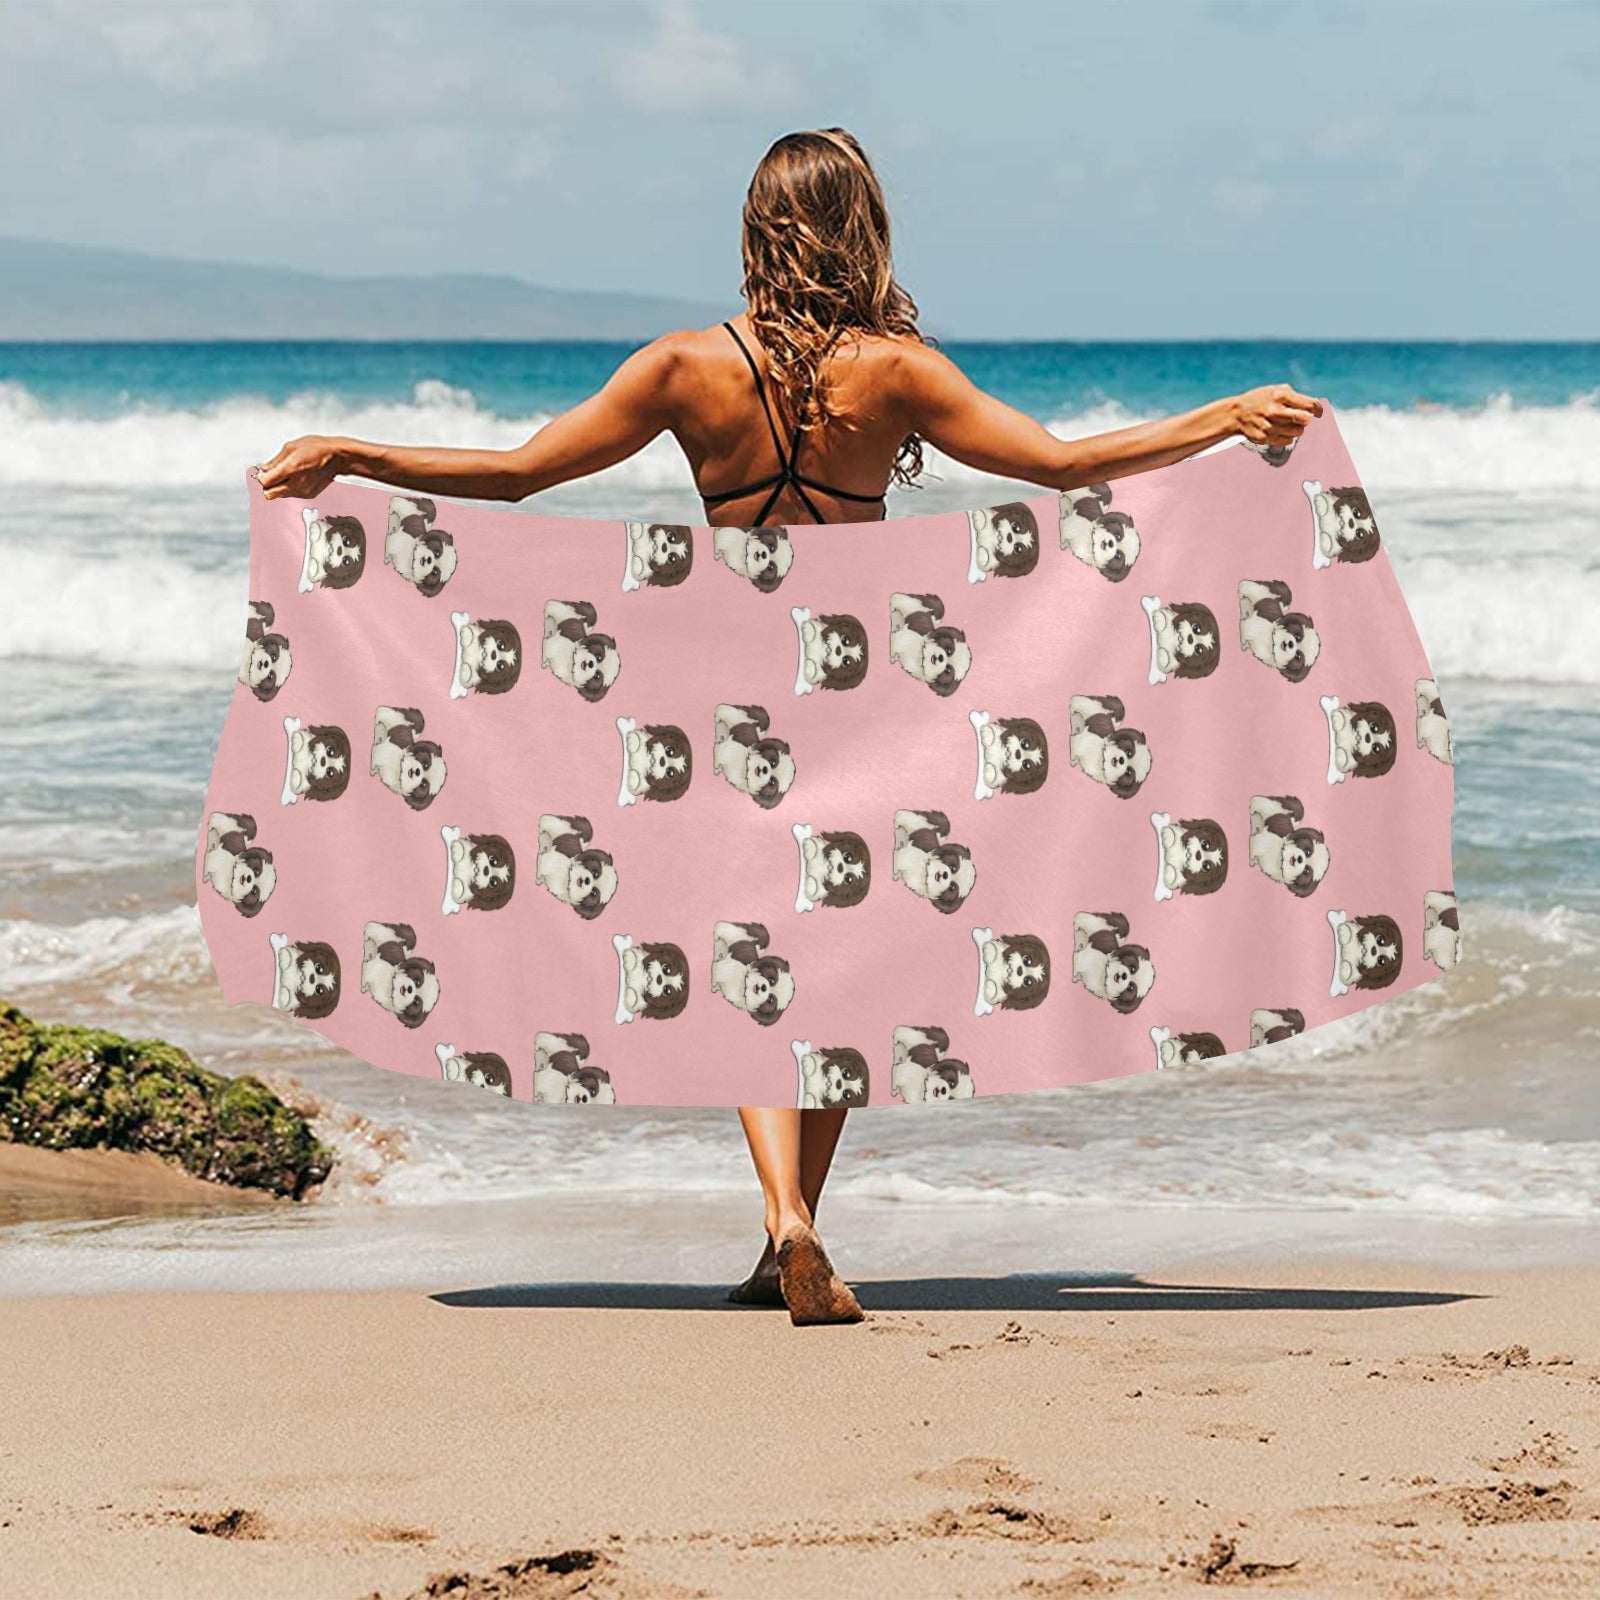 Shih Tzu Beach Towel - Pink